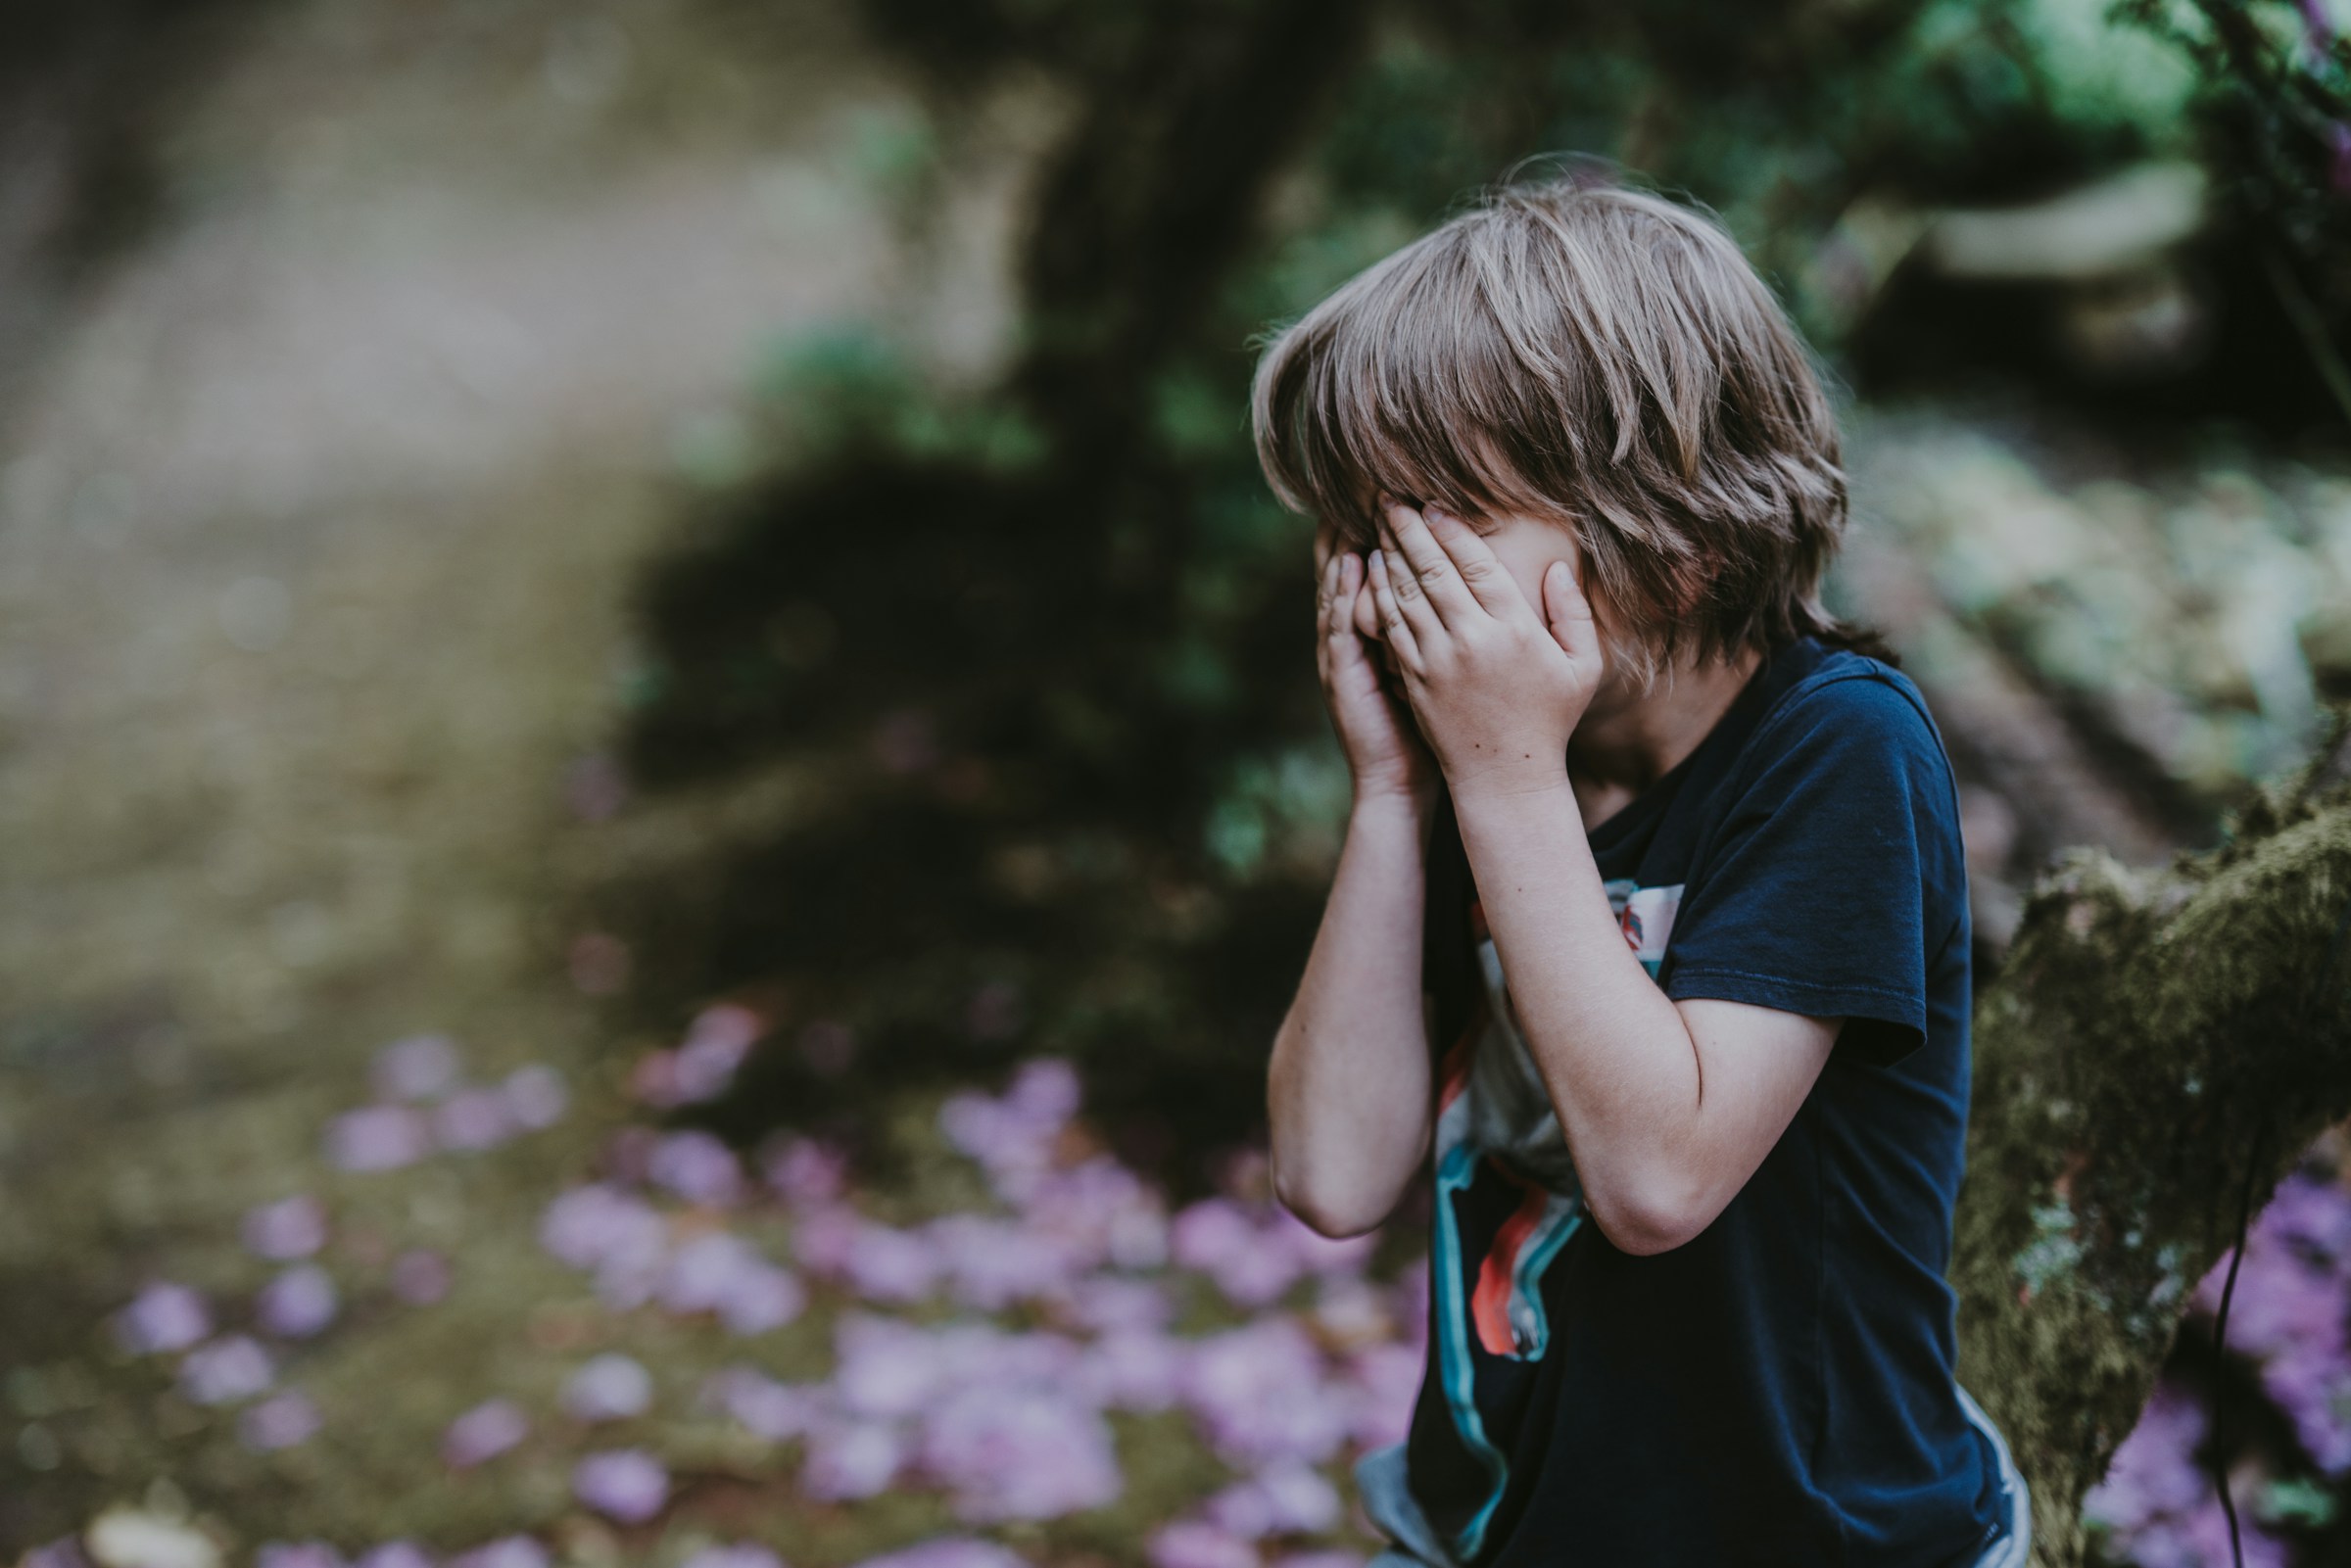 A little boy crying | Source: Unsplash